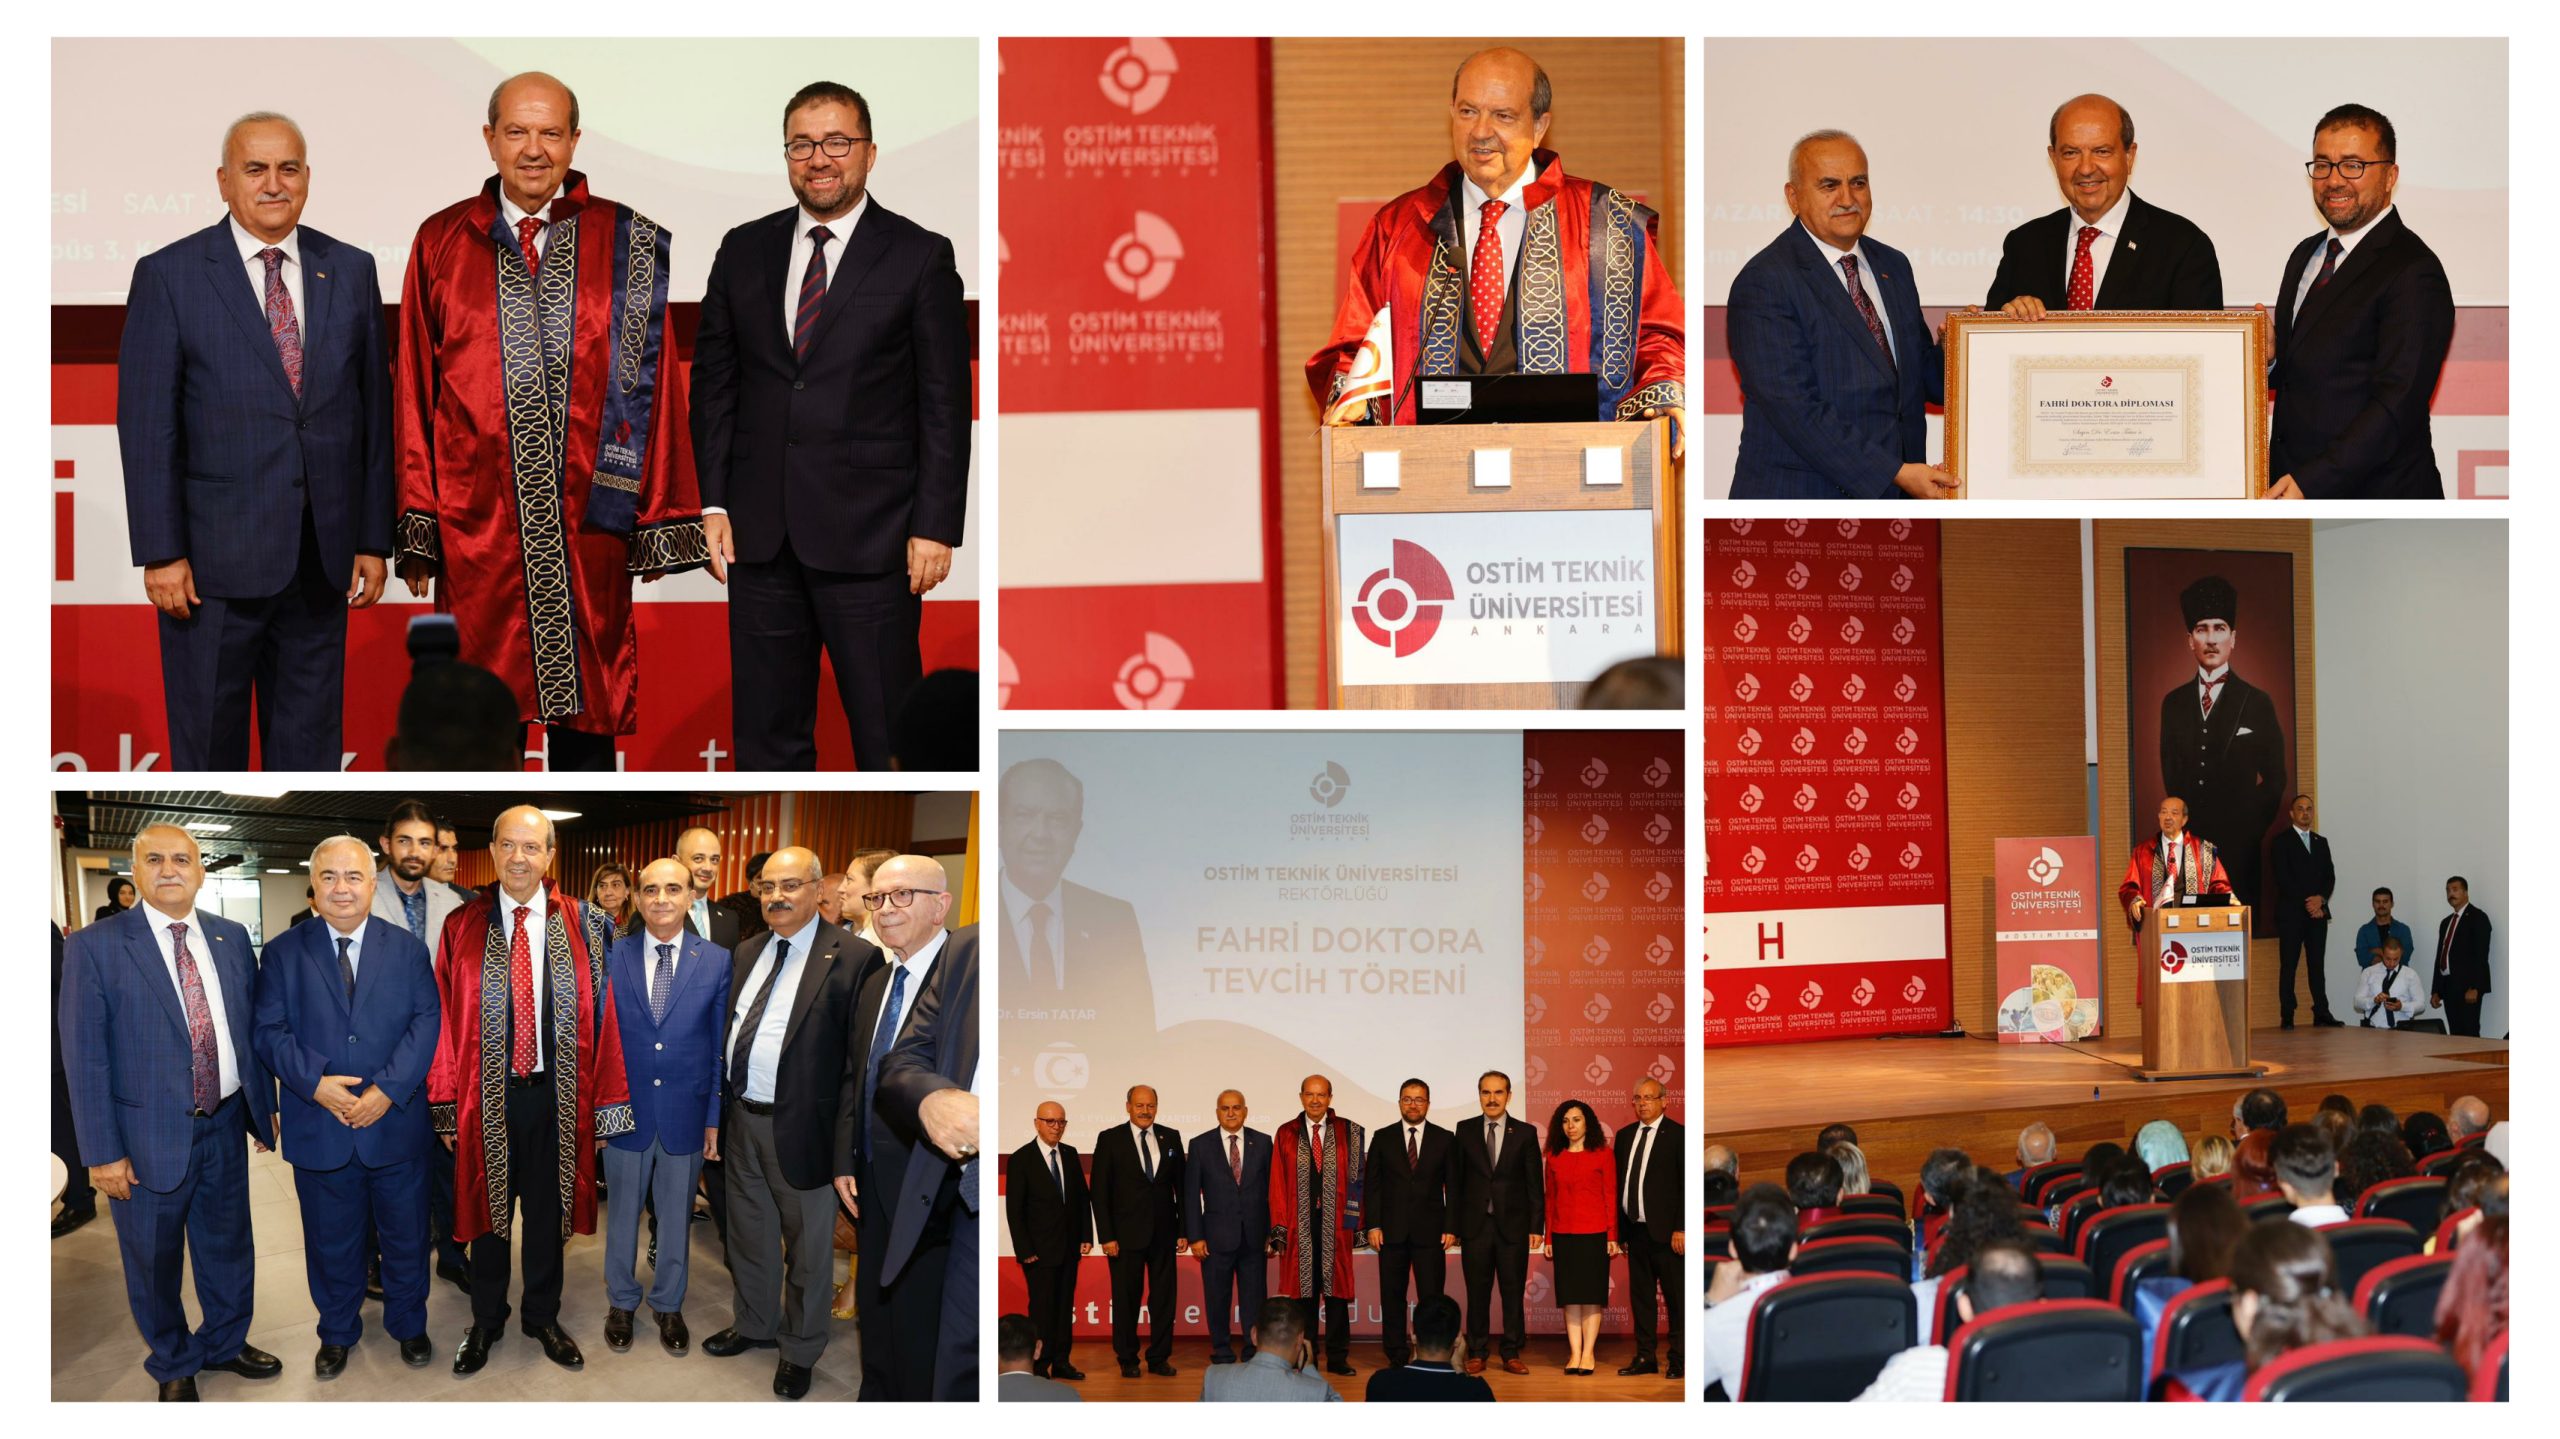 OSTİM Teknik Üniversitesi’nden, Cumhurbaşkanı Tatar’a “fahri doktora” unvanı